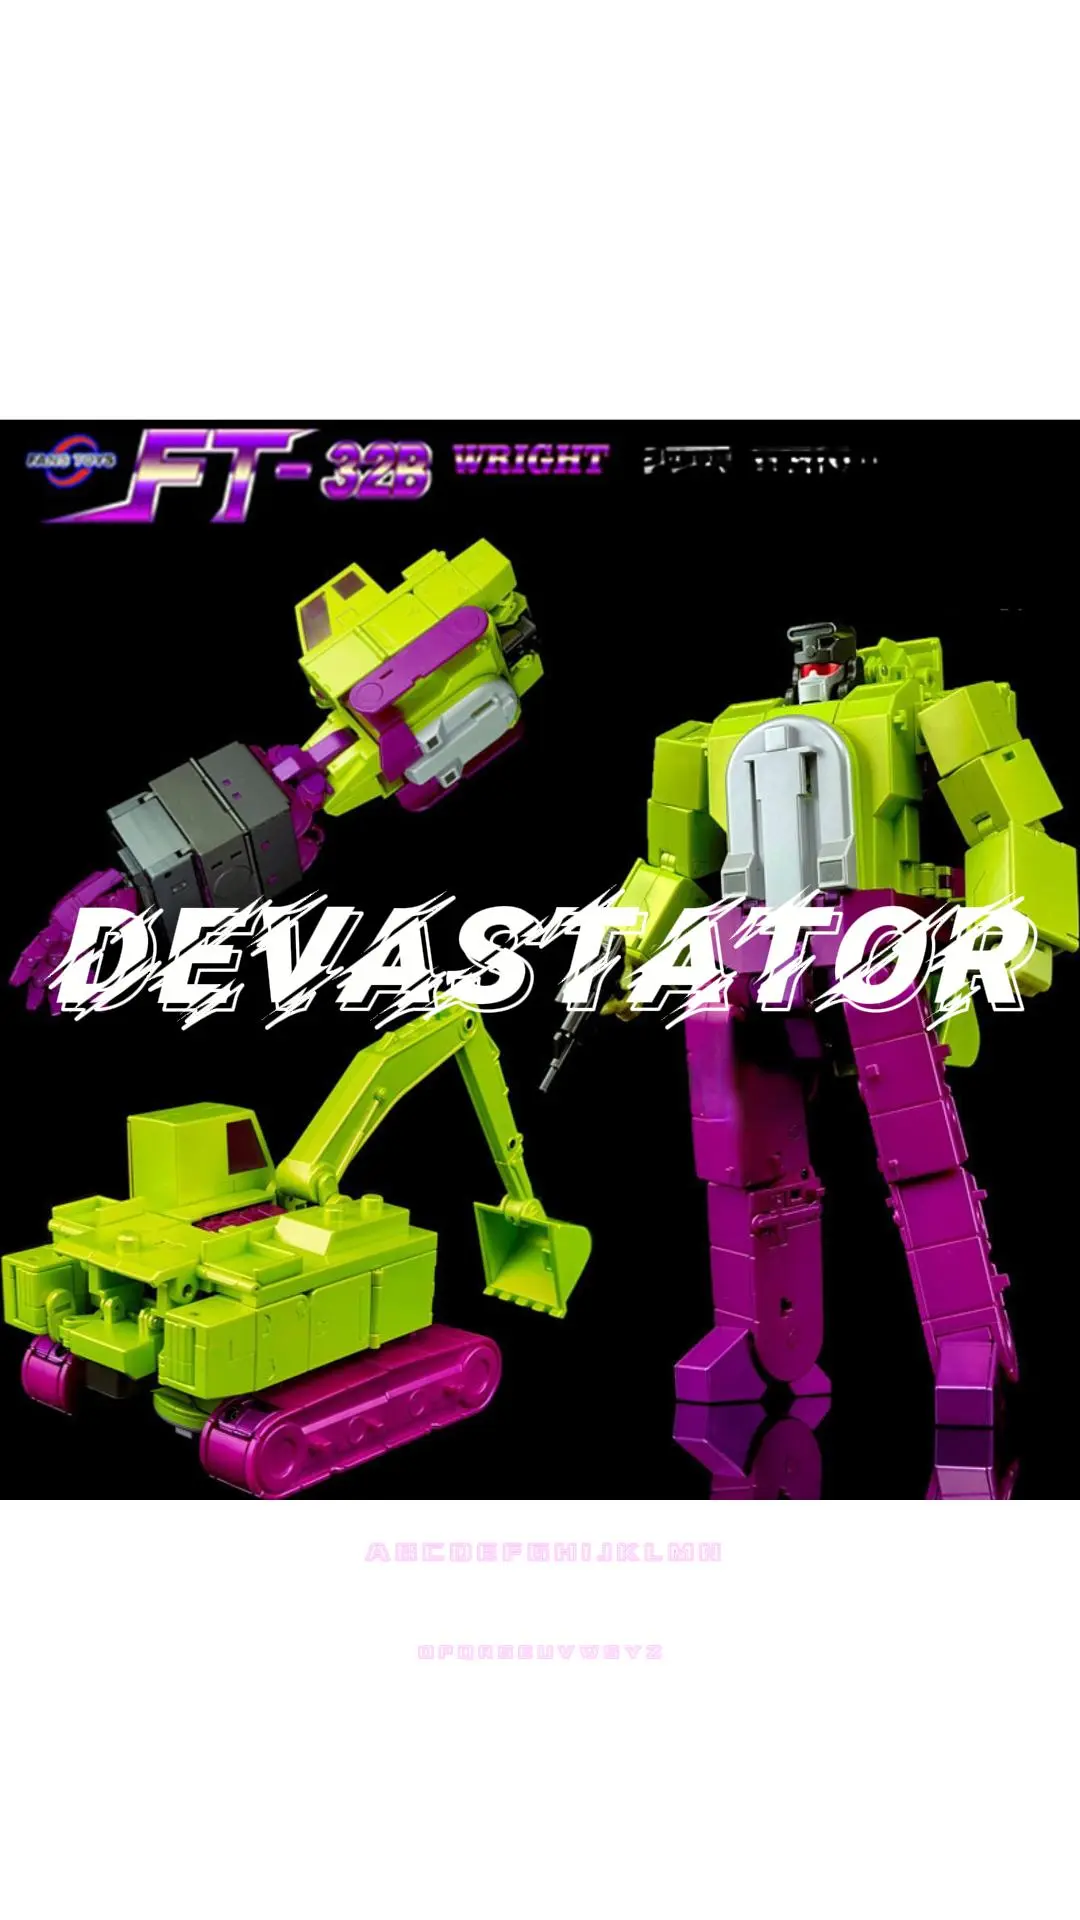 Pre-order Fanstoys FT-32B Wright G1 Transformers Scavenger Devastator Decepticons